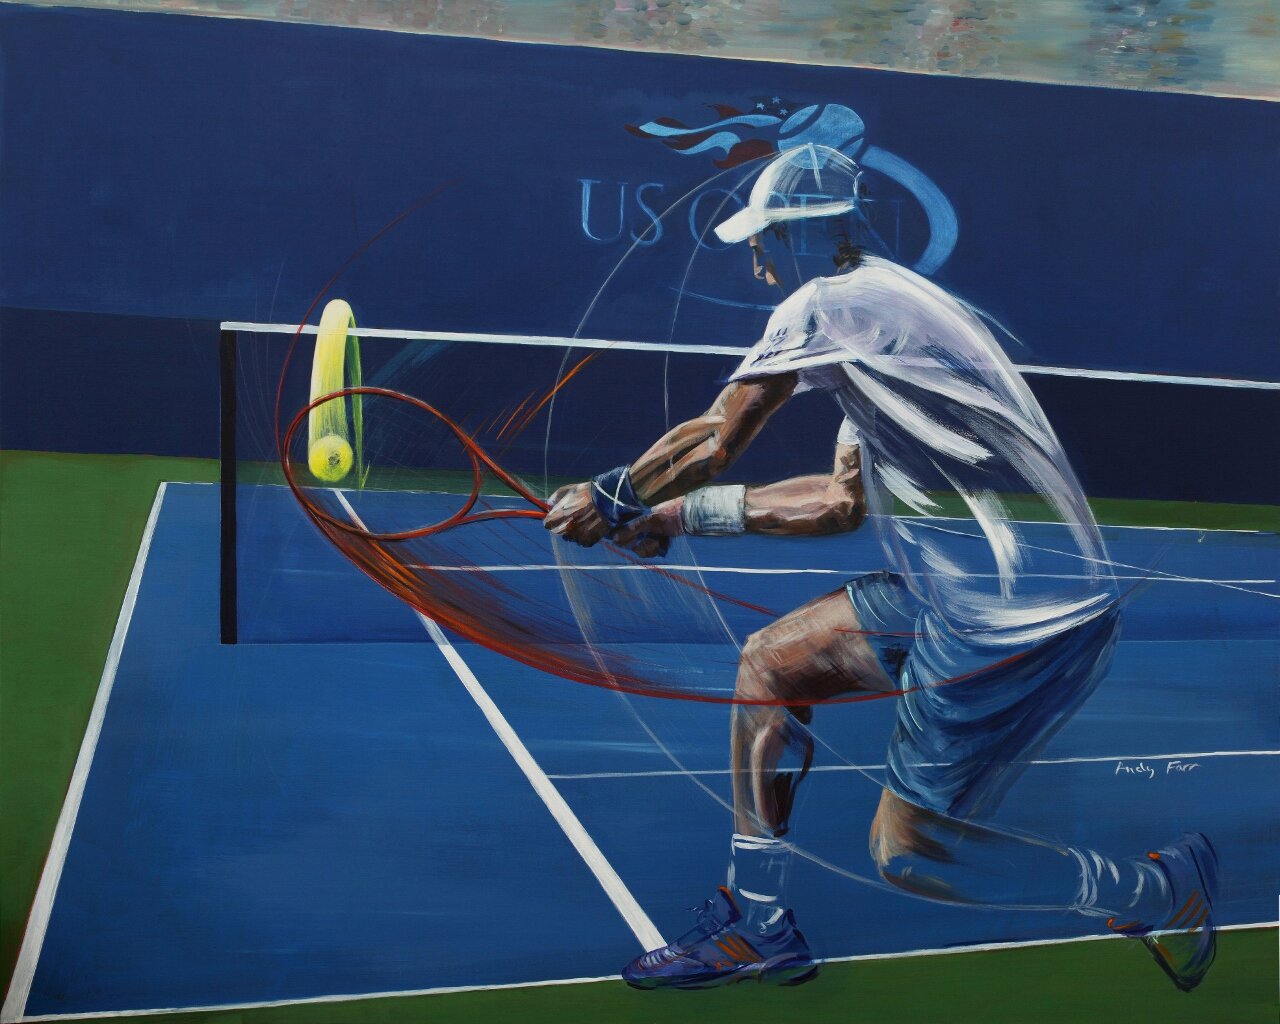 Murray US Open 2012 (1280x1024).jpg